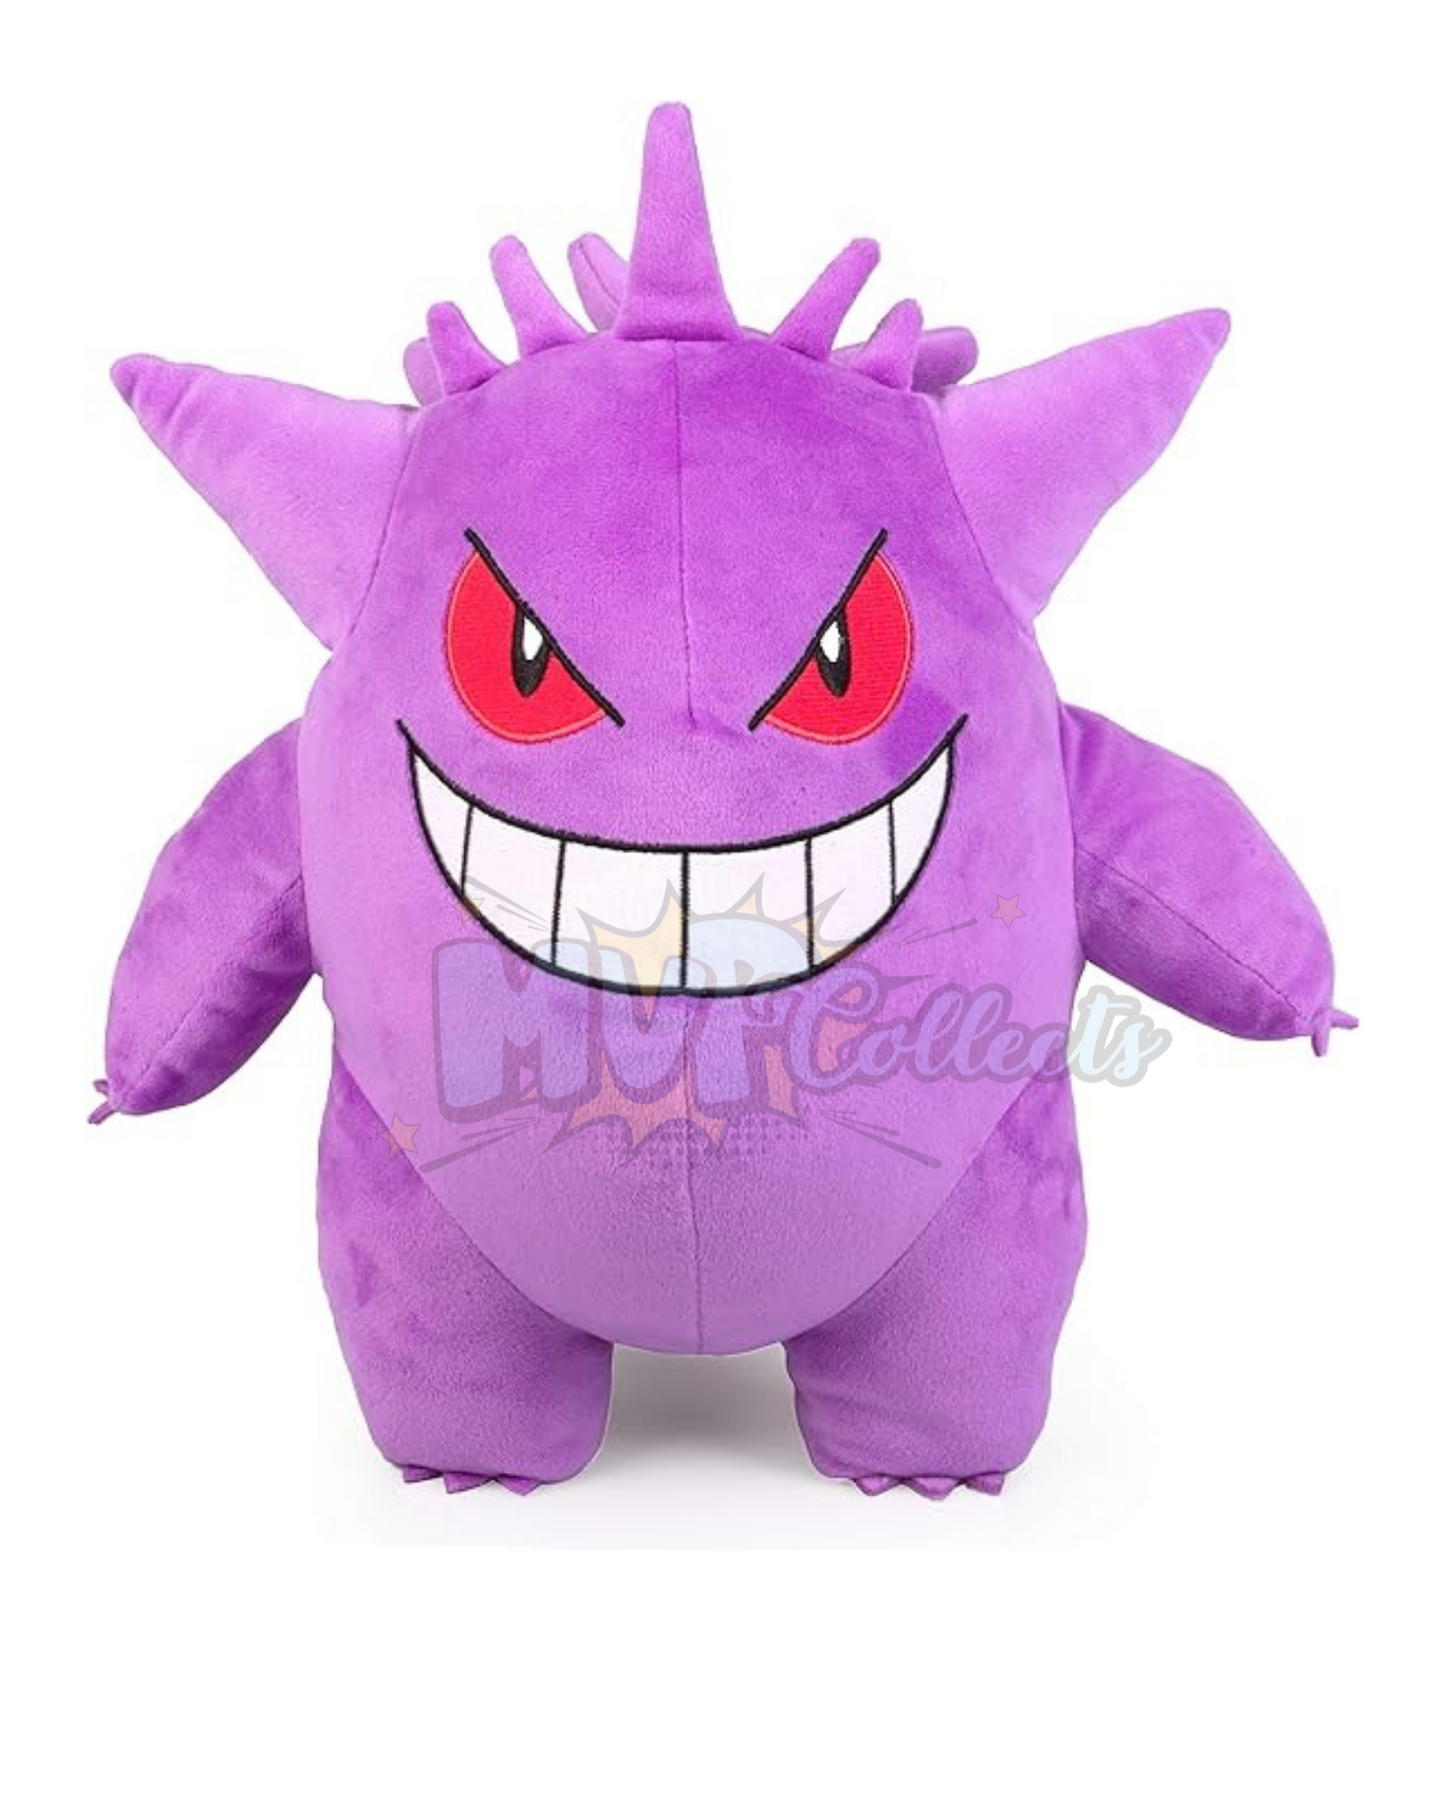 Pokémon Gengar Plush Stuffed Animal Toy